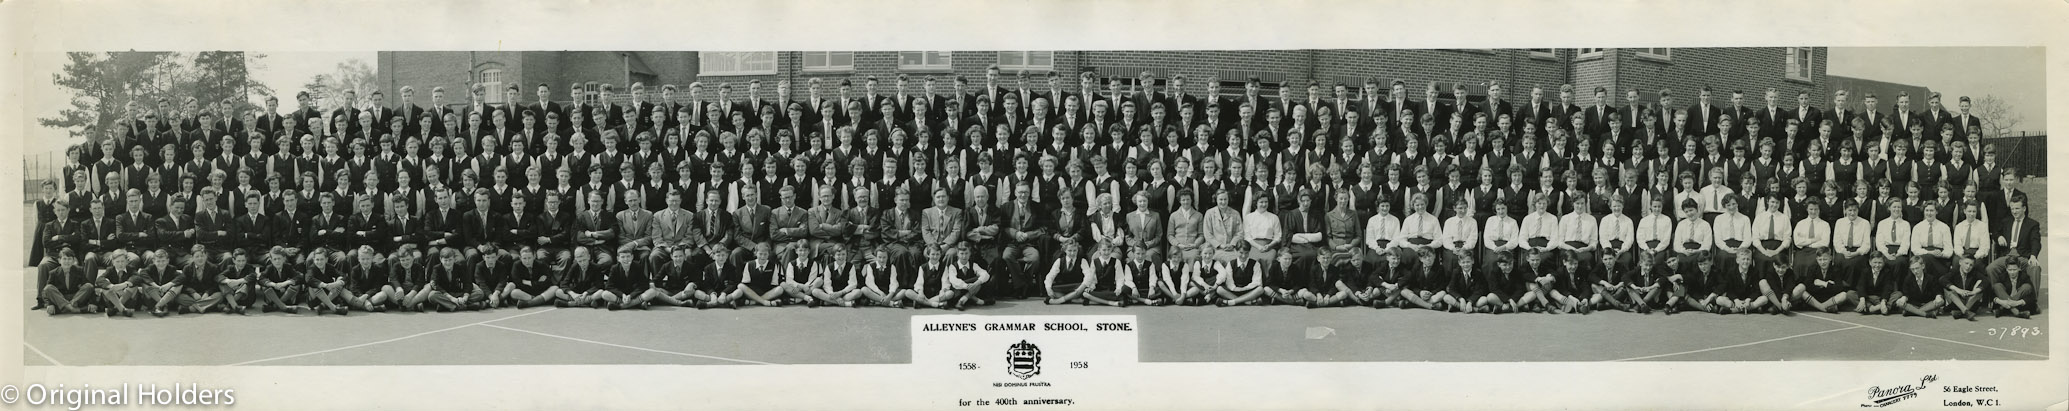 Alleyne's Grammar School - 1958 - 400th Anniversary